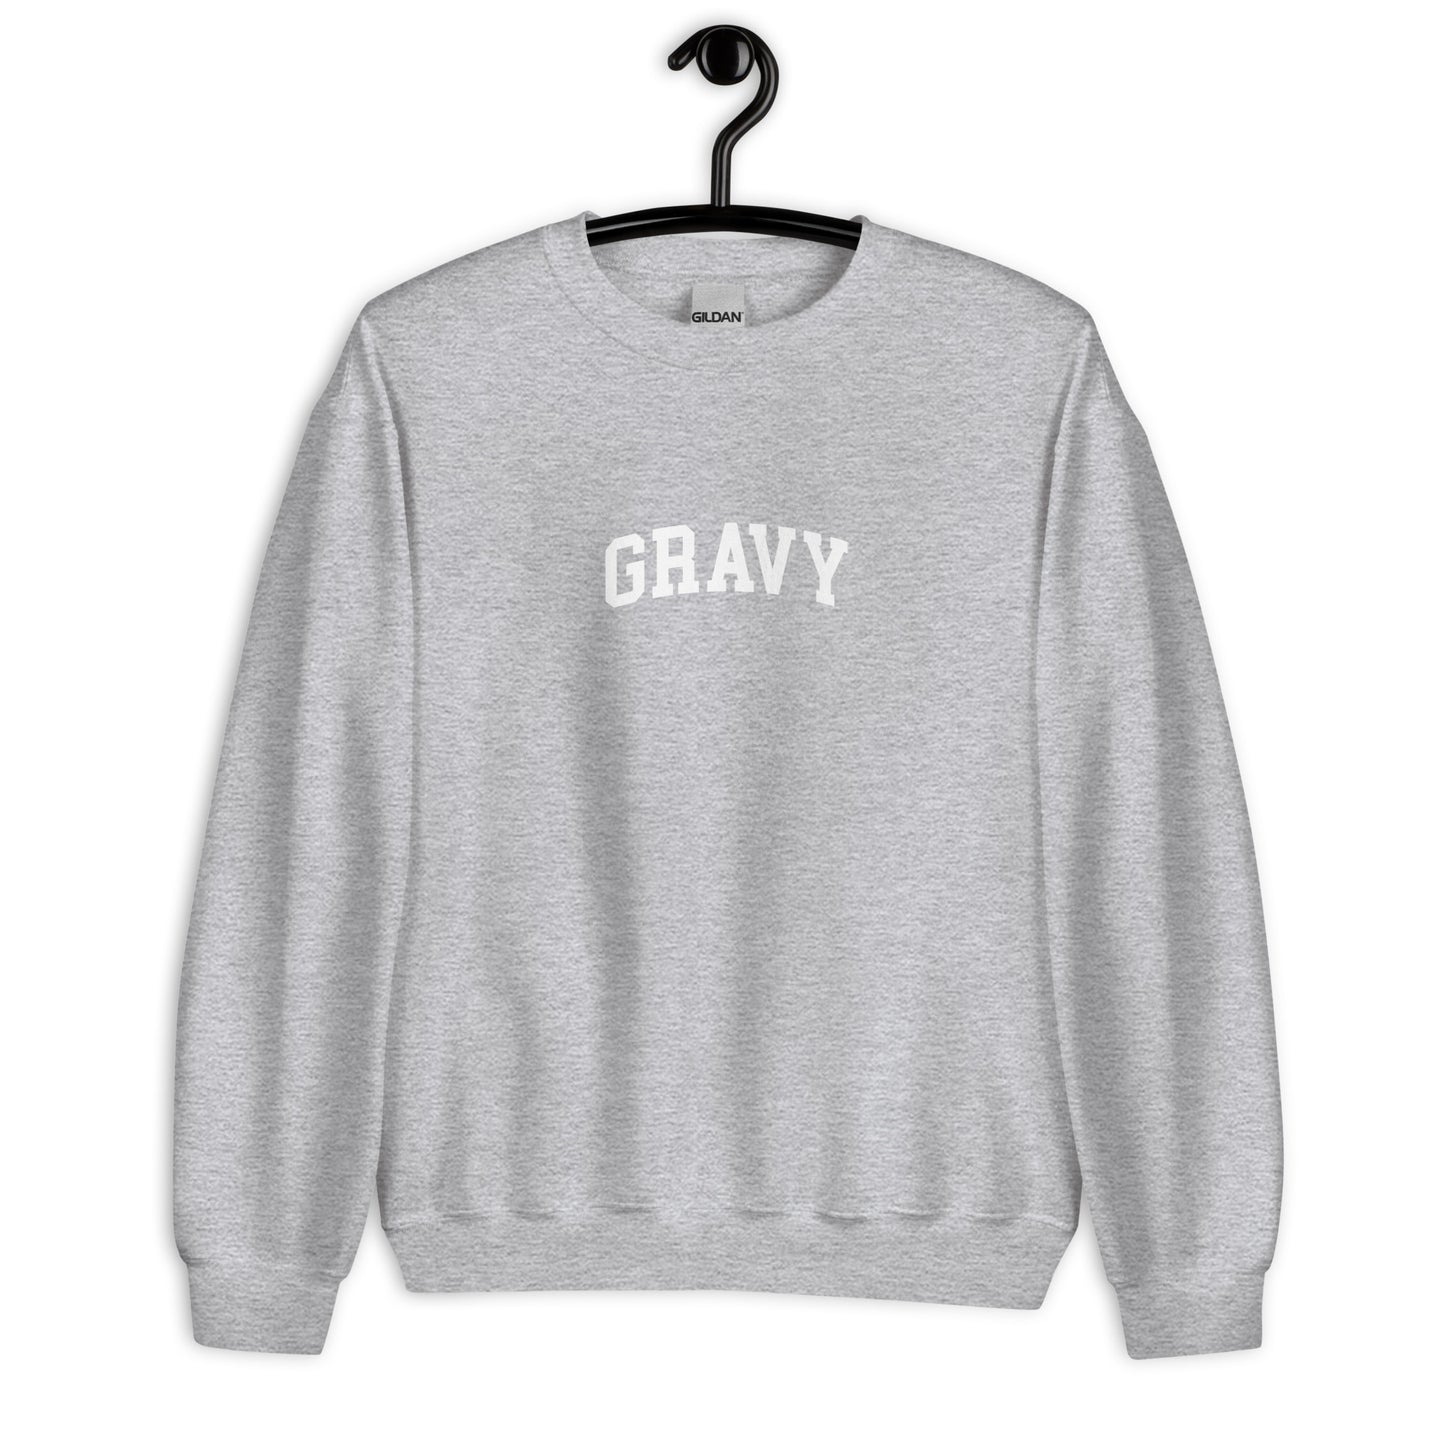 Gravy Sweatshirt - Arched Font